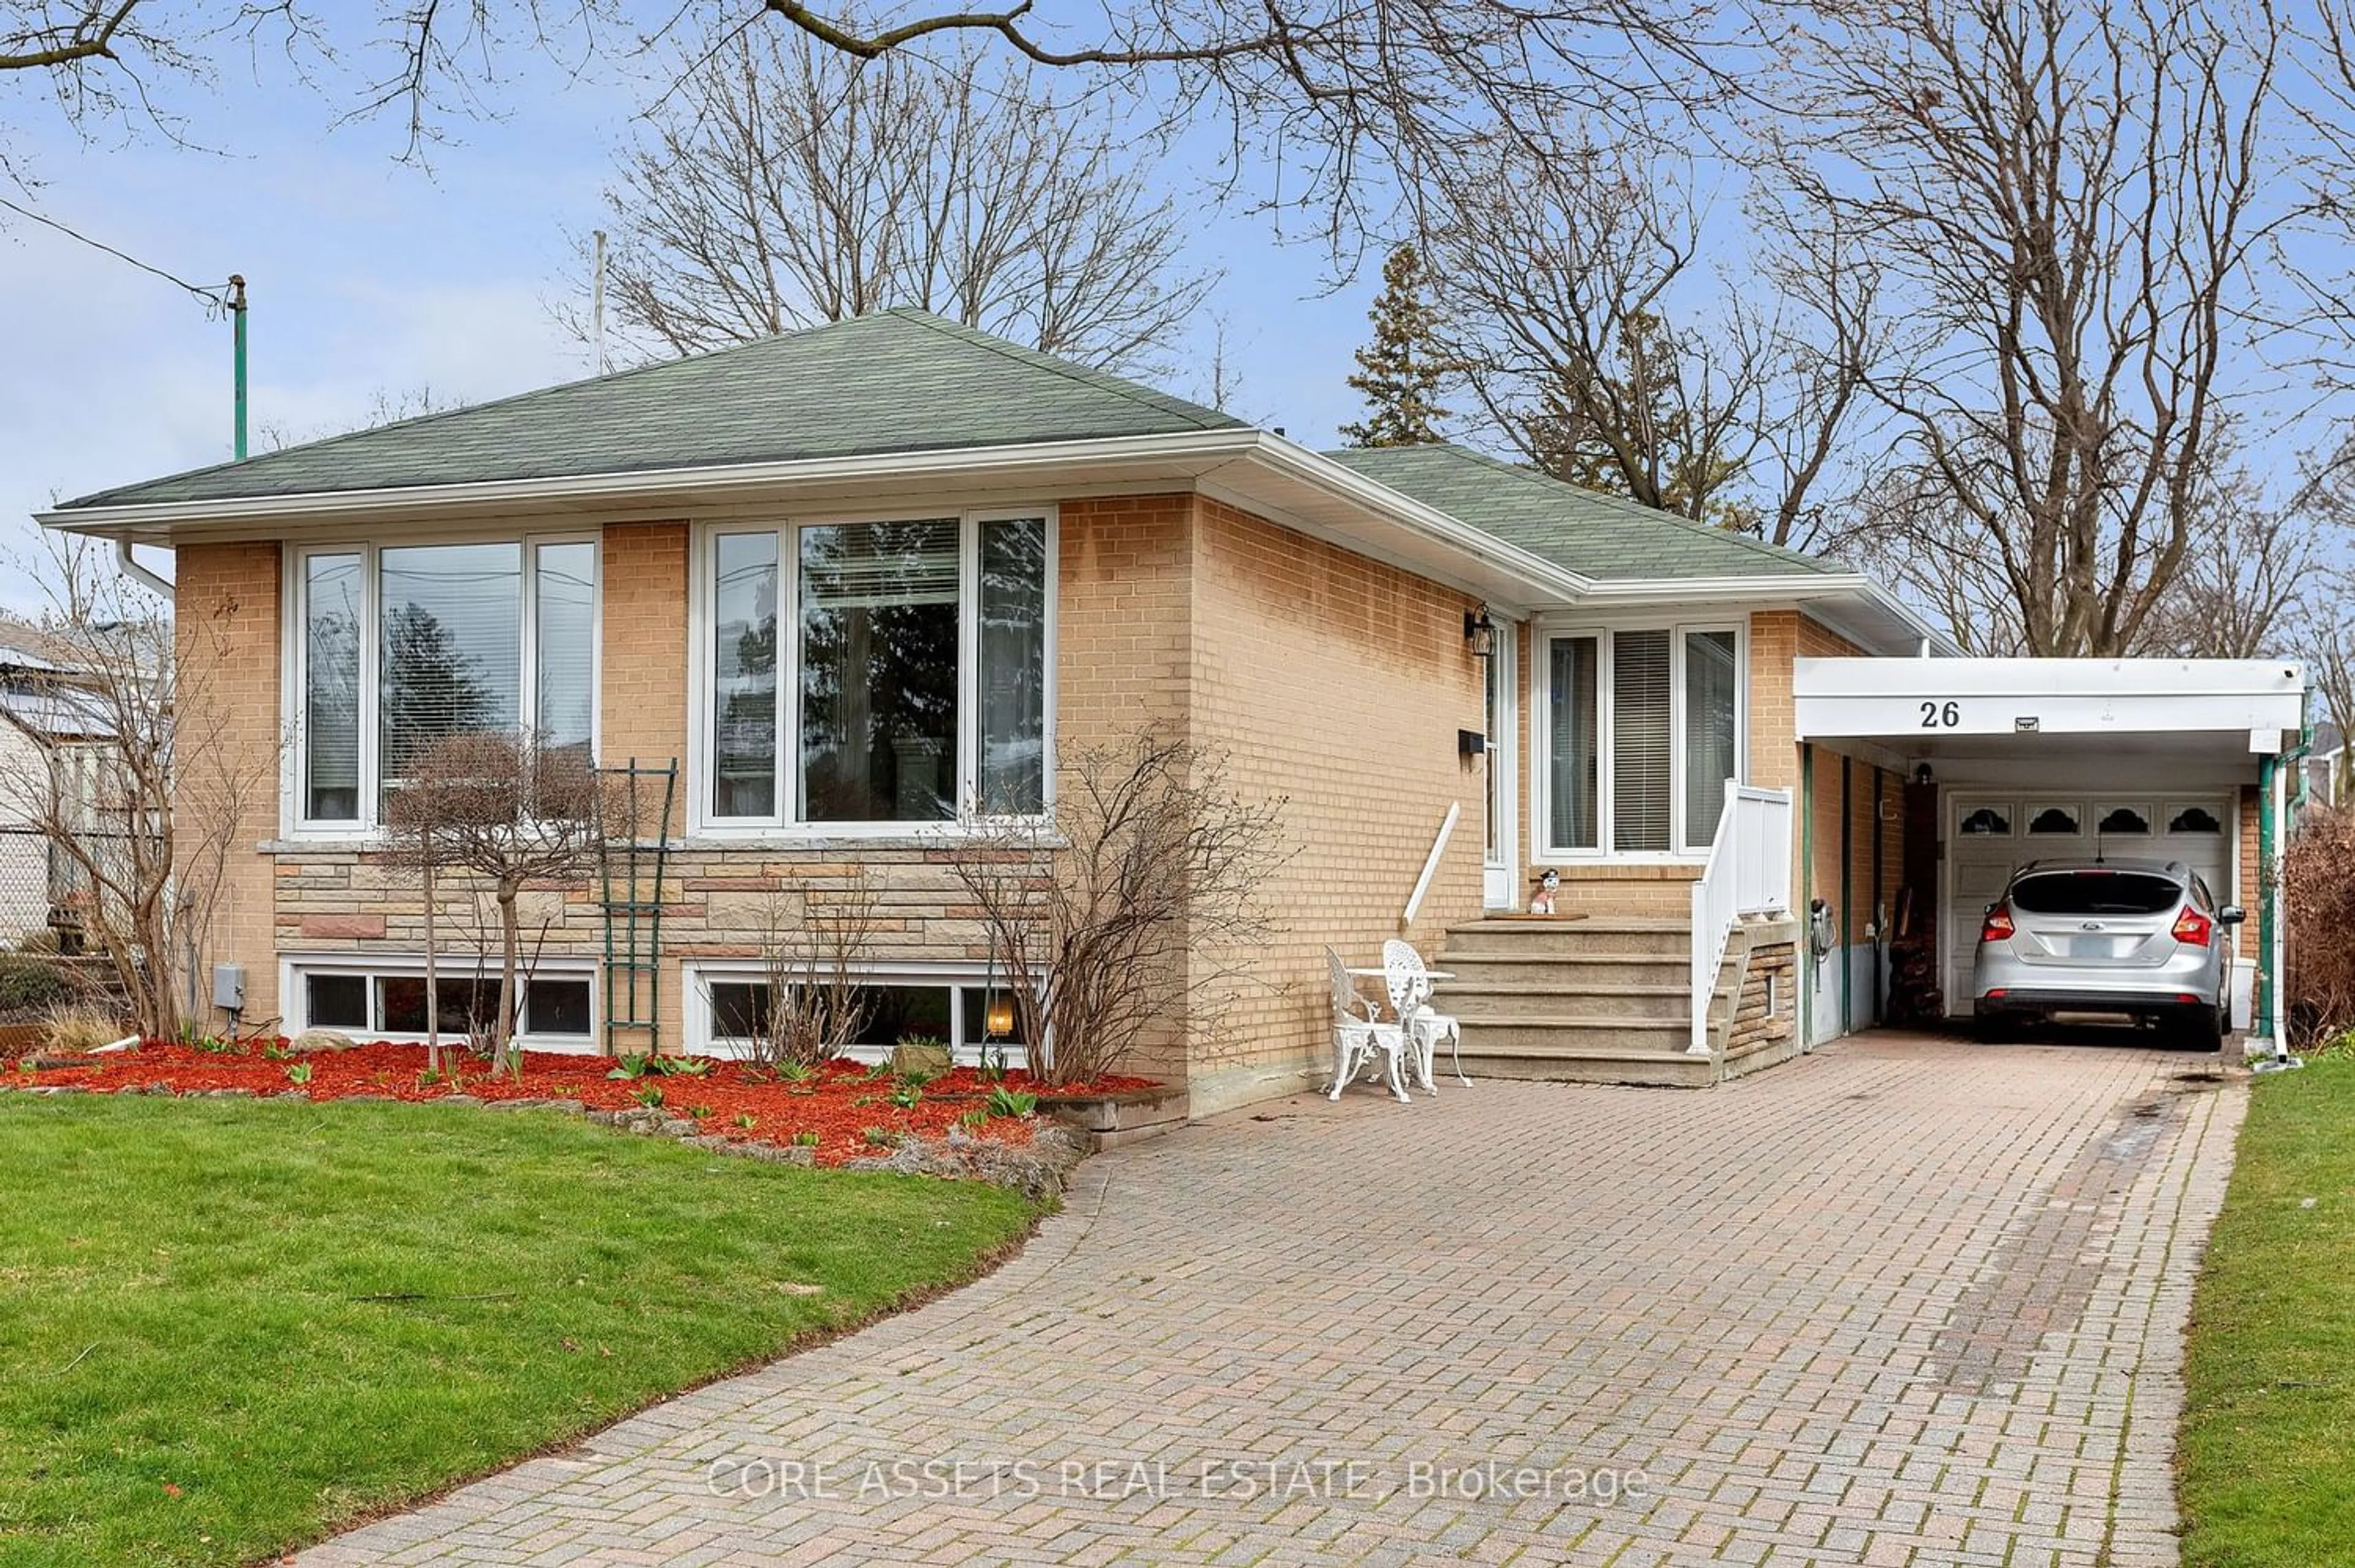 Home with brick exterior material for 26 Paragon Rd, Toronto Ontario M9R 1J5